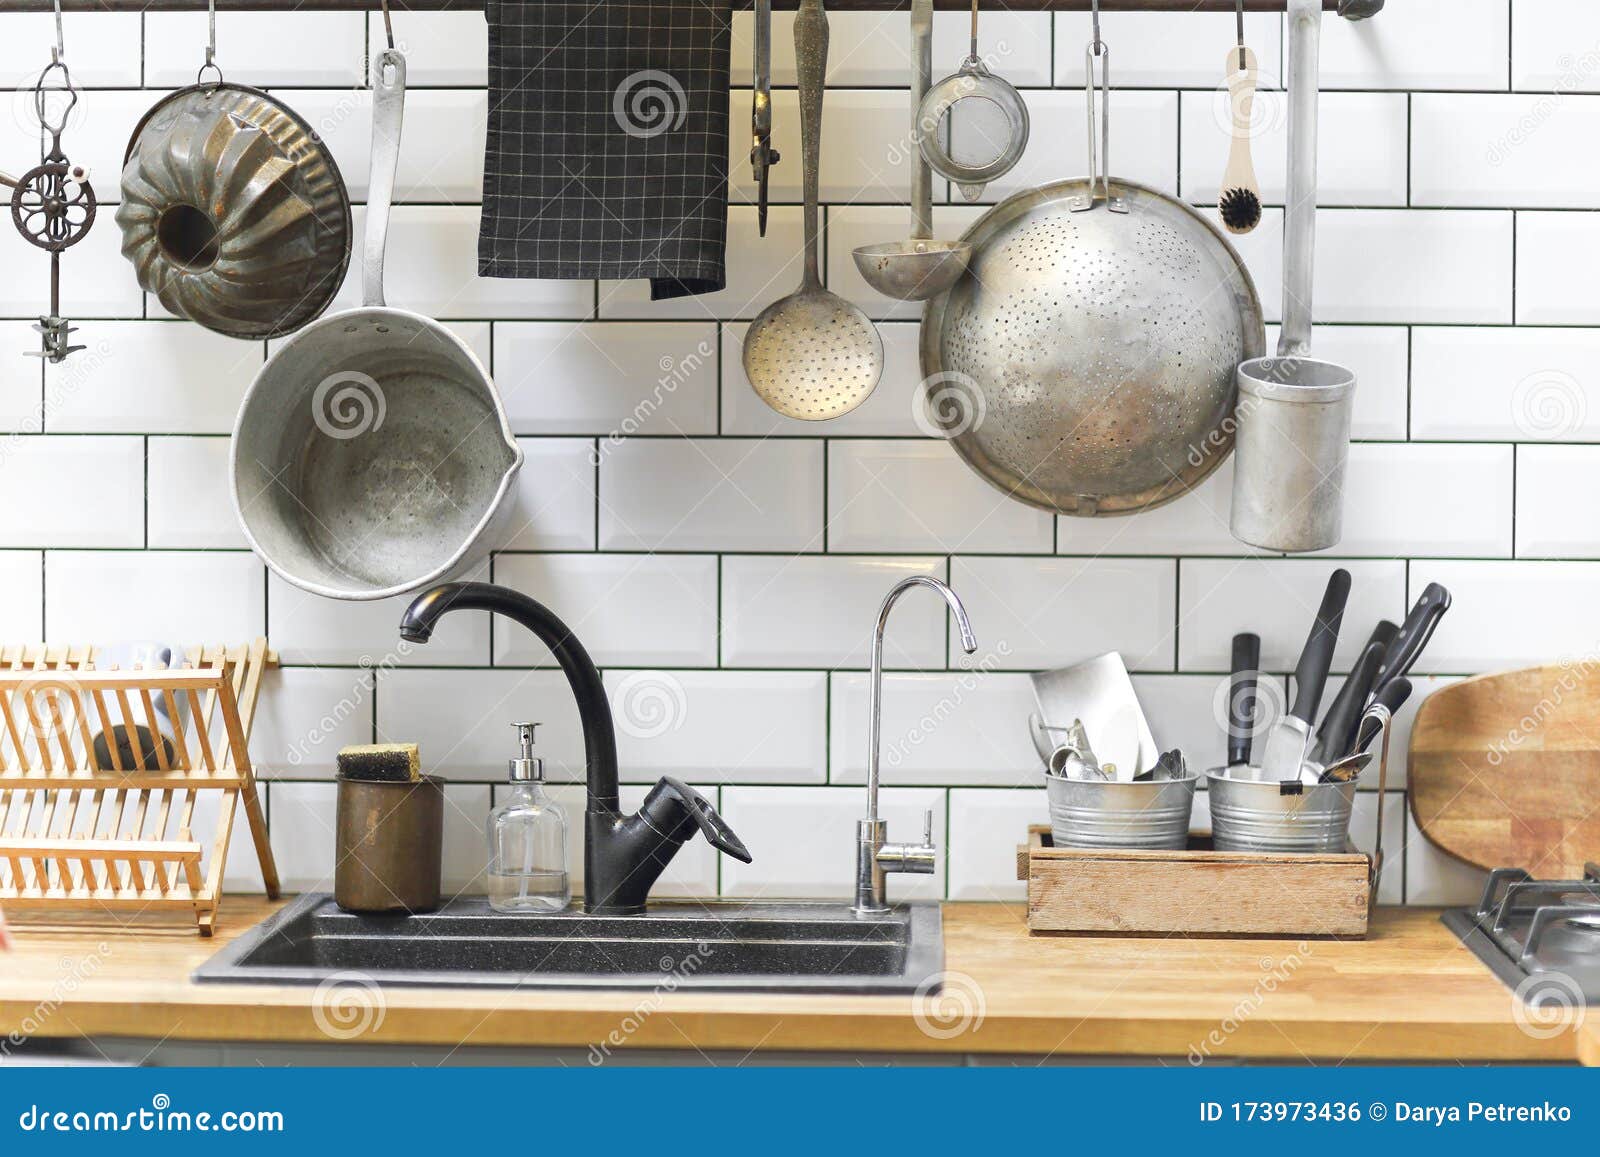 Retro Kitchenware Around Sink at Home Stock Photo   Image of ...